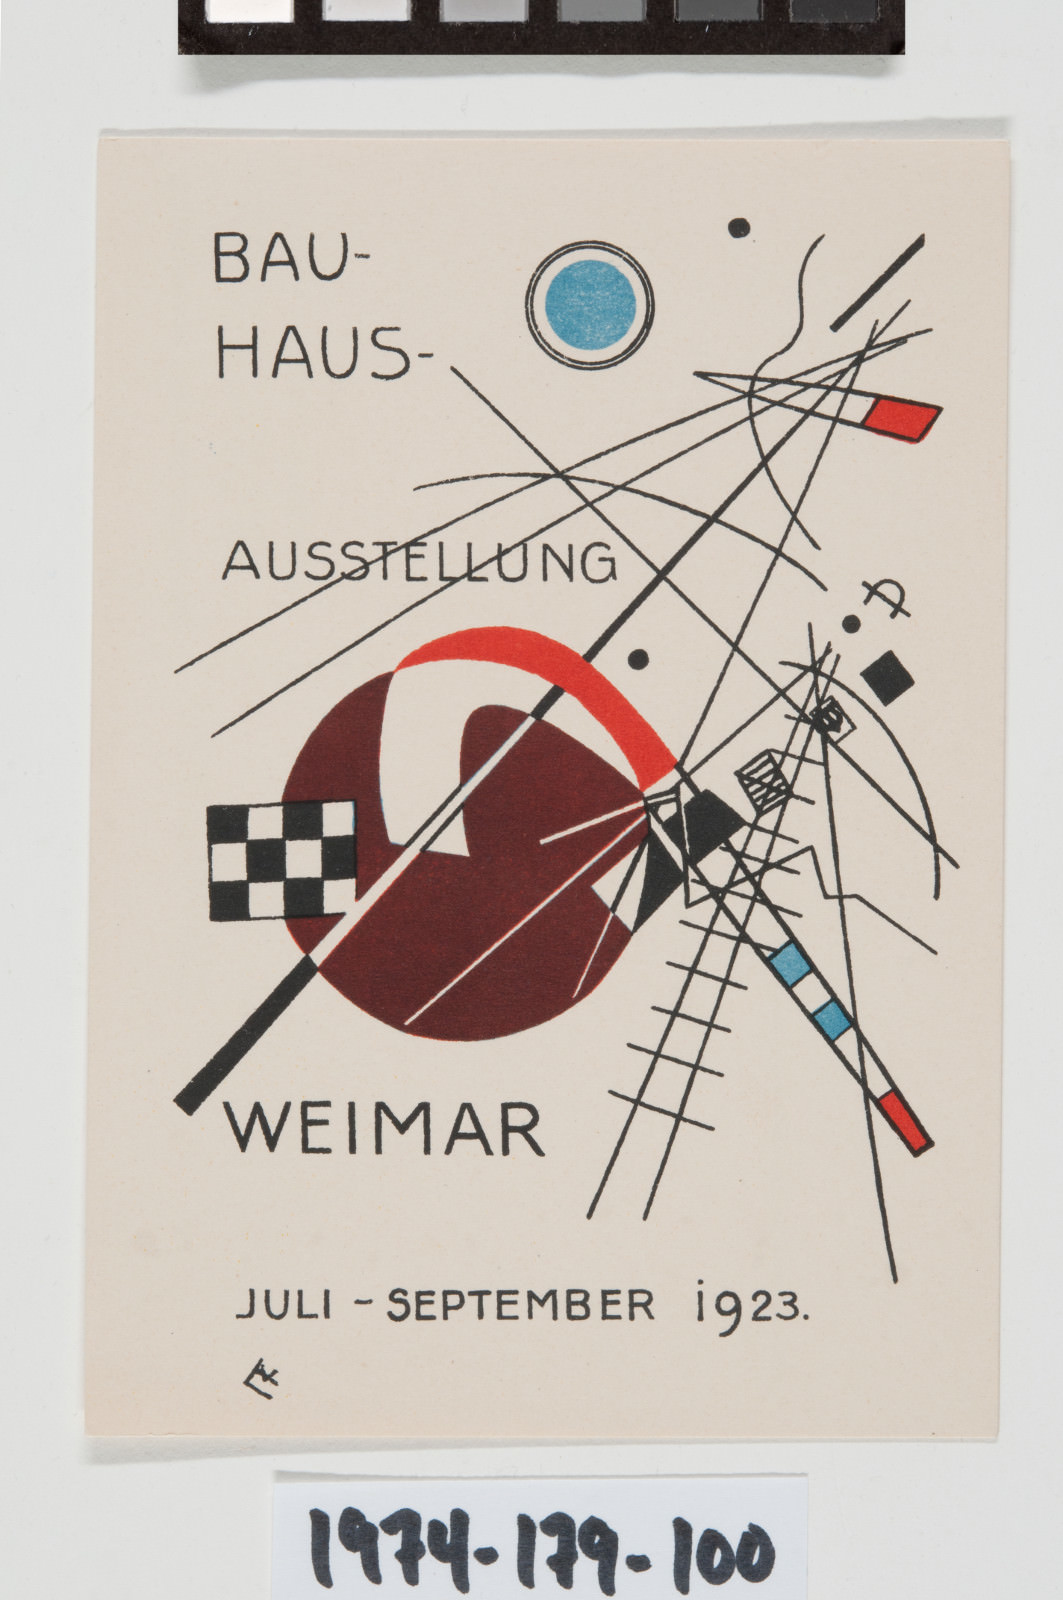 Fig. 6 – Vasily Kandinsky, Postcard No. 3, for the Bauhaus Exhibition, Weimar, July-September 1923, Color lithograph, Image: 5 3/8 x 3 3/4 polegadas (13.7 x 9.5 cm) Sheet: 5 15/16 x 4 1/4 inches (15.1 x 1x.8 cm). Philadelphia Museum of Art, Gift of Carl Zigrosser, 1974-179-100.